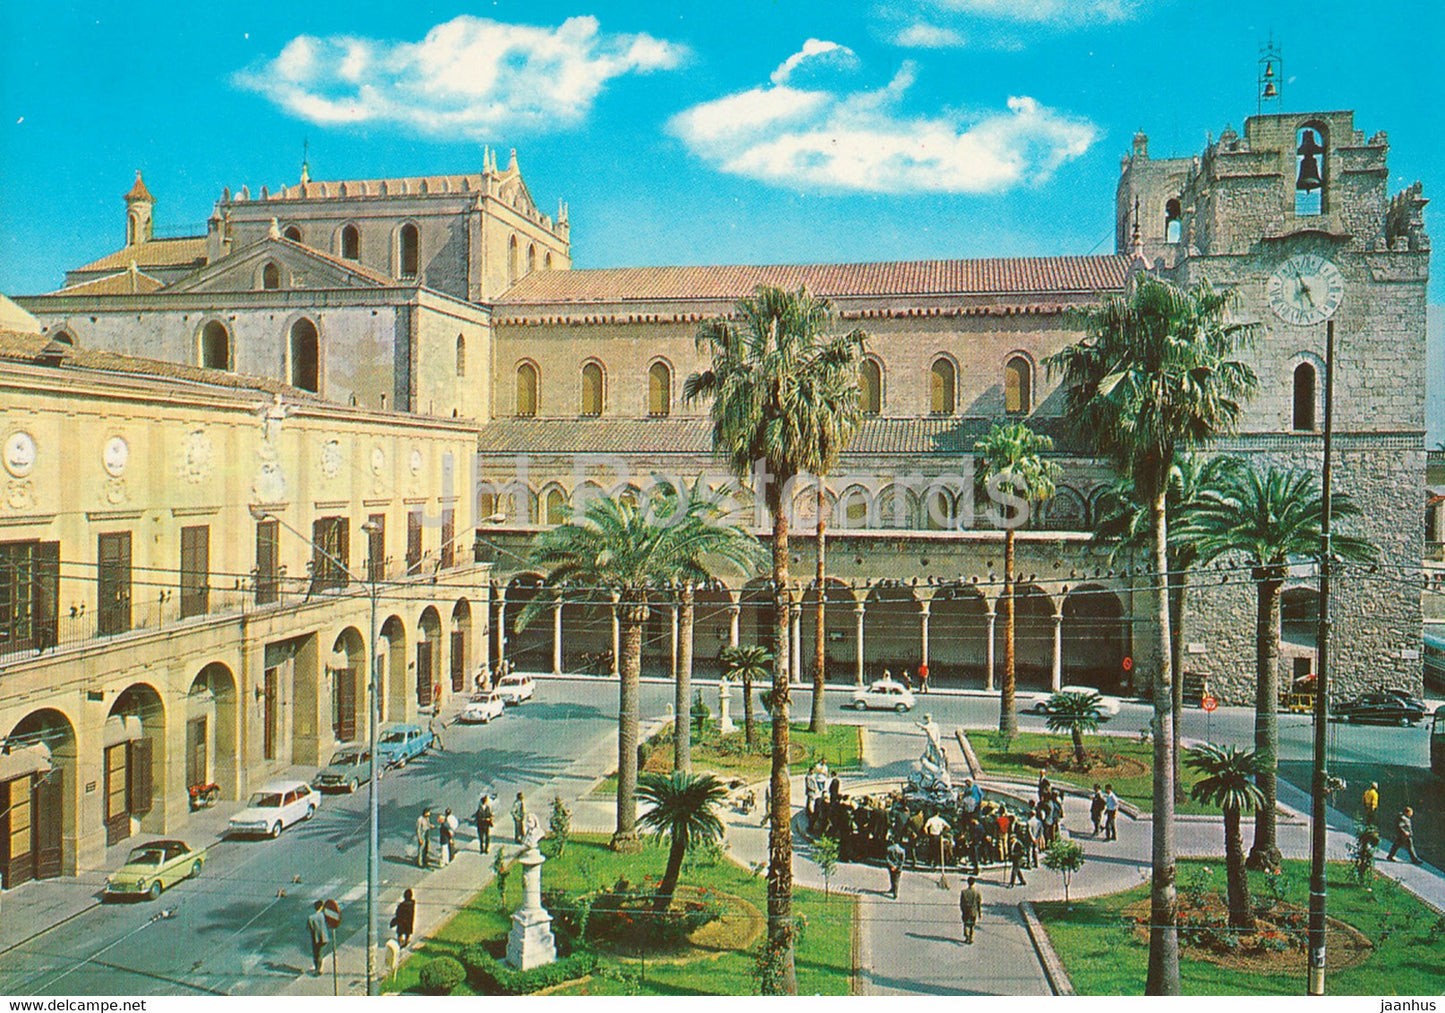 Monreale - Piazza Vittorio Emanuele - 2528 - Italy - unused - JH Postcards